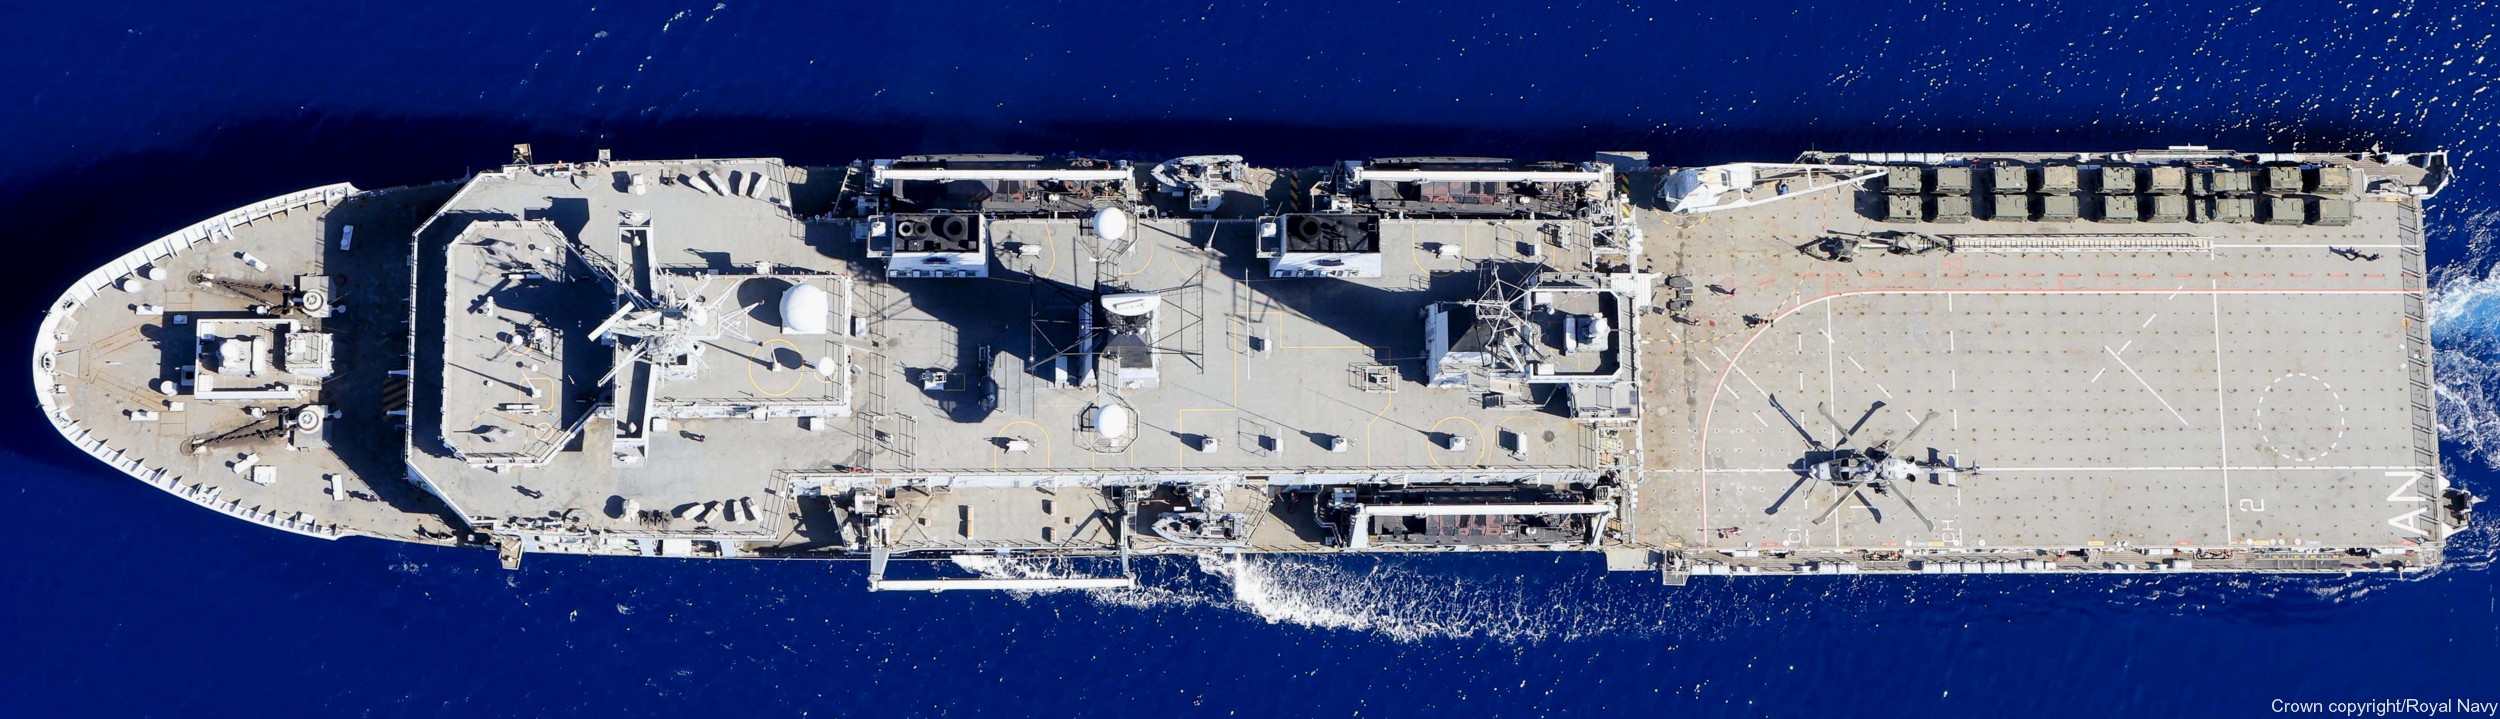 l14 hms albion amphibious transport dock assault ship landing platform lpd royal navy 94